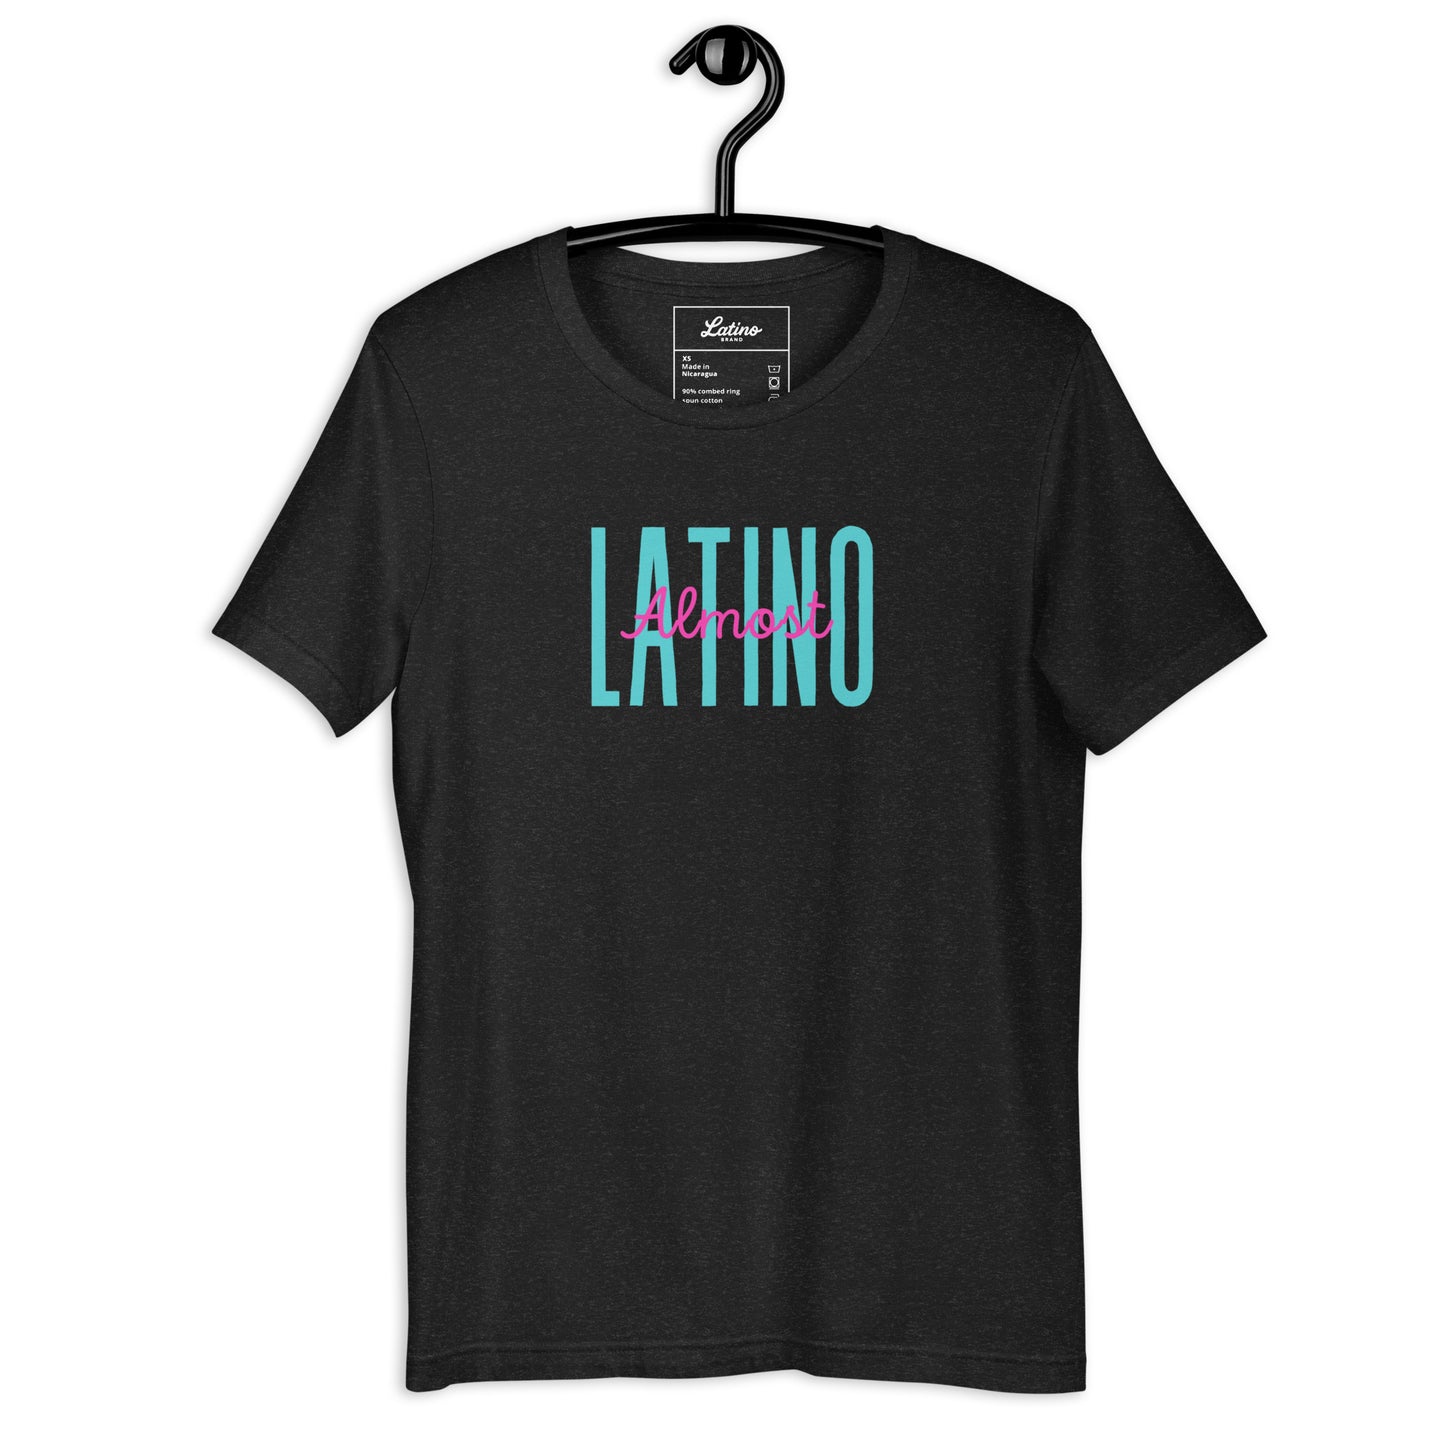 Almost Latino